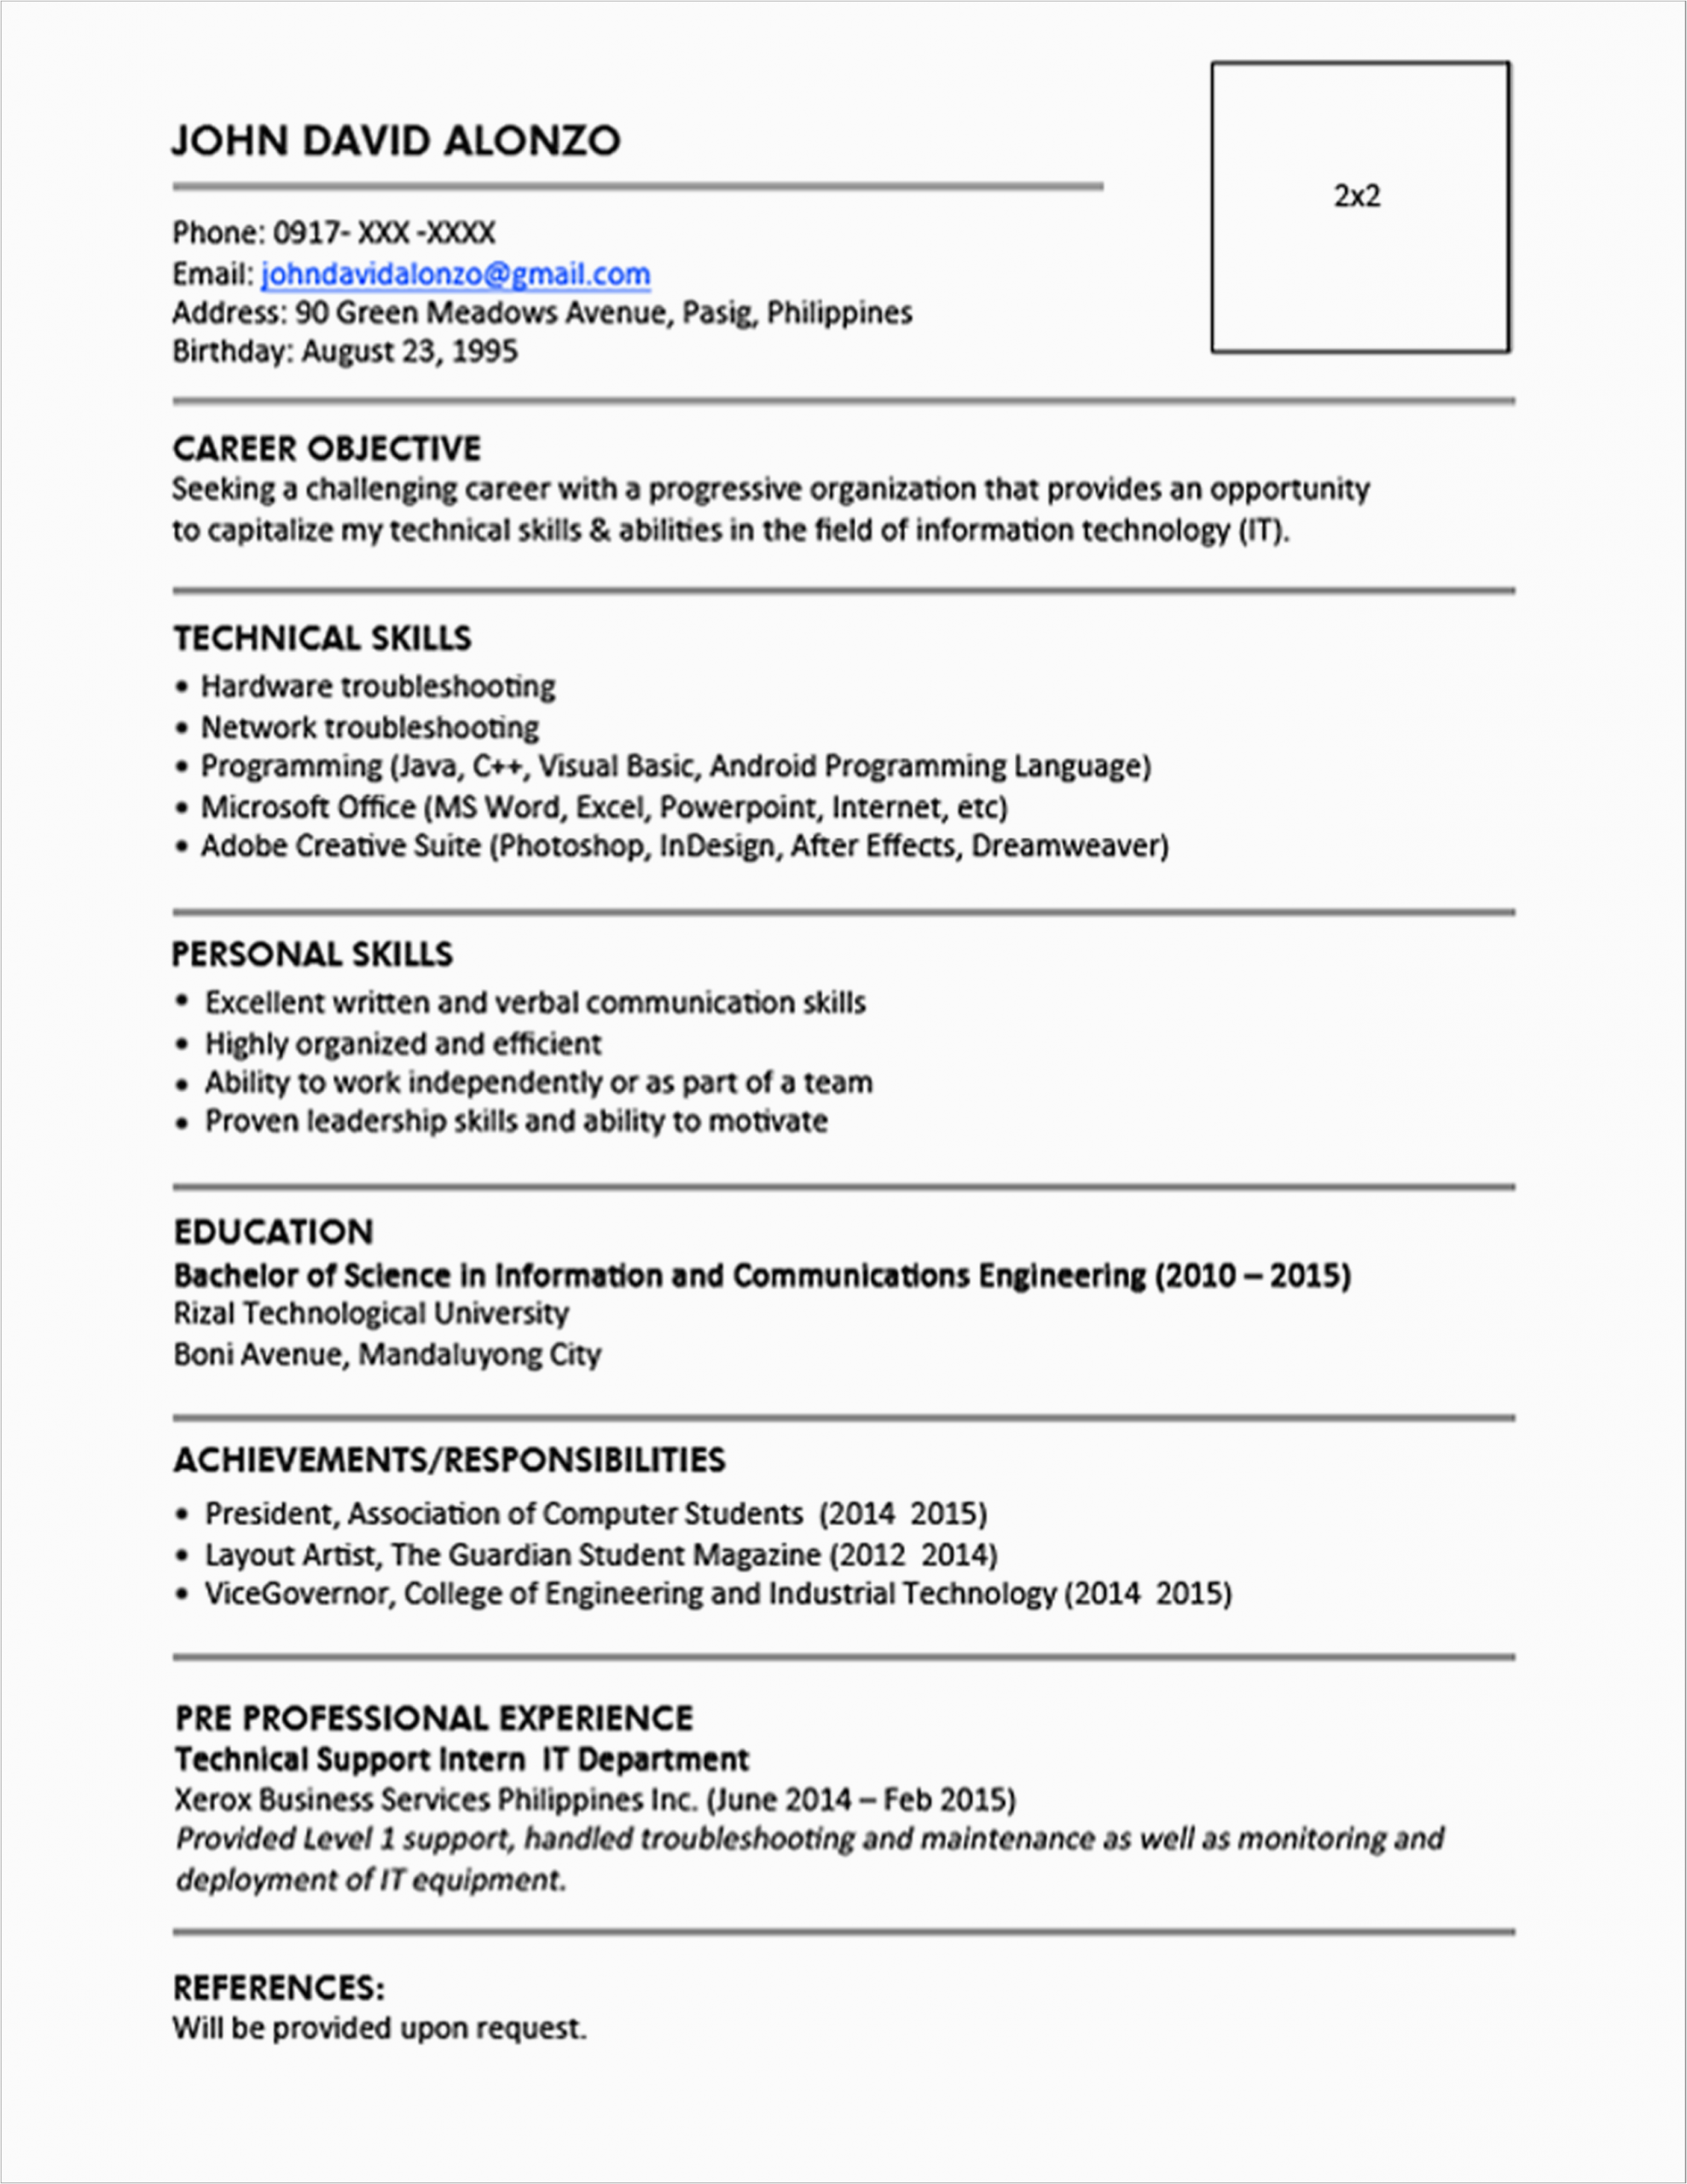 Sample Resume for tourism Fresh Graduates Sample Resume format for Fresh Graduates E Page format